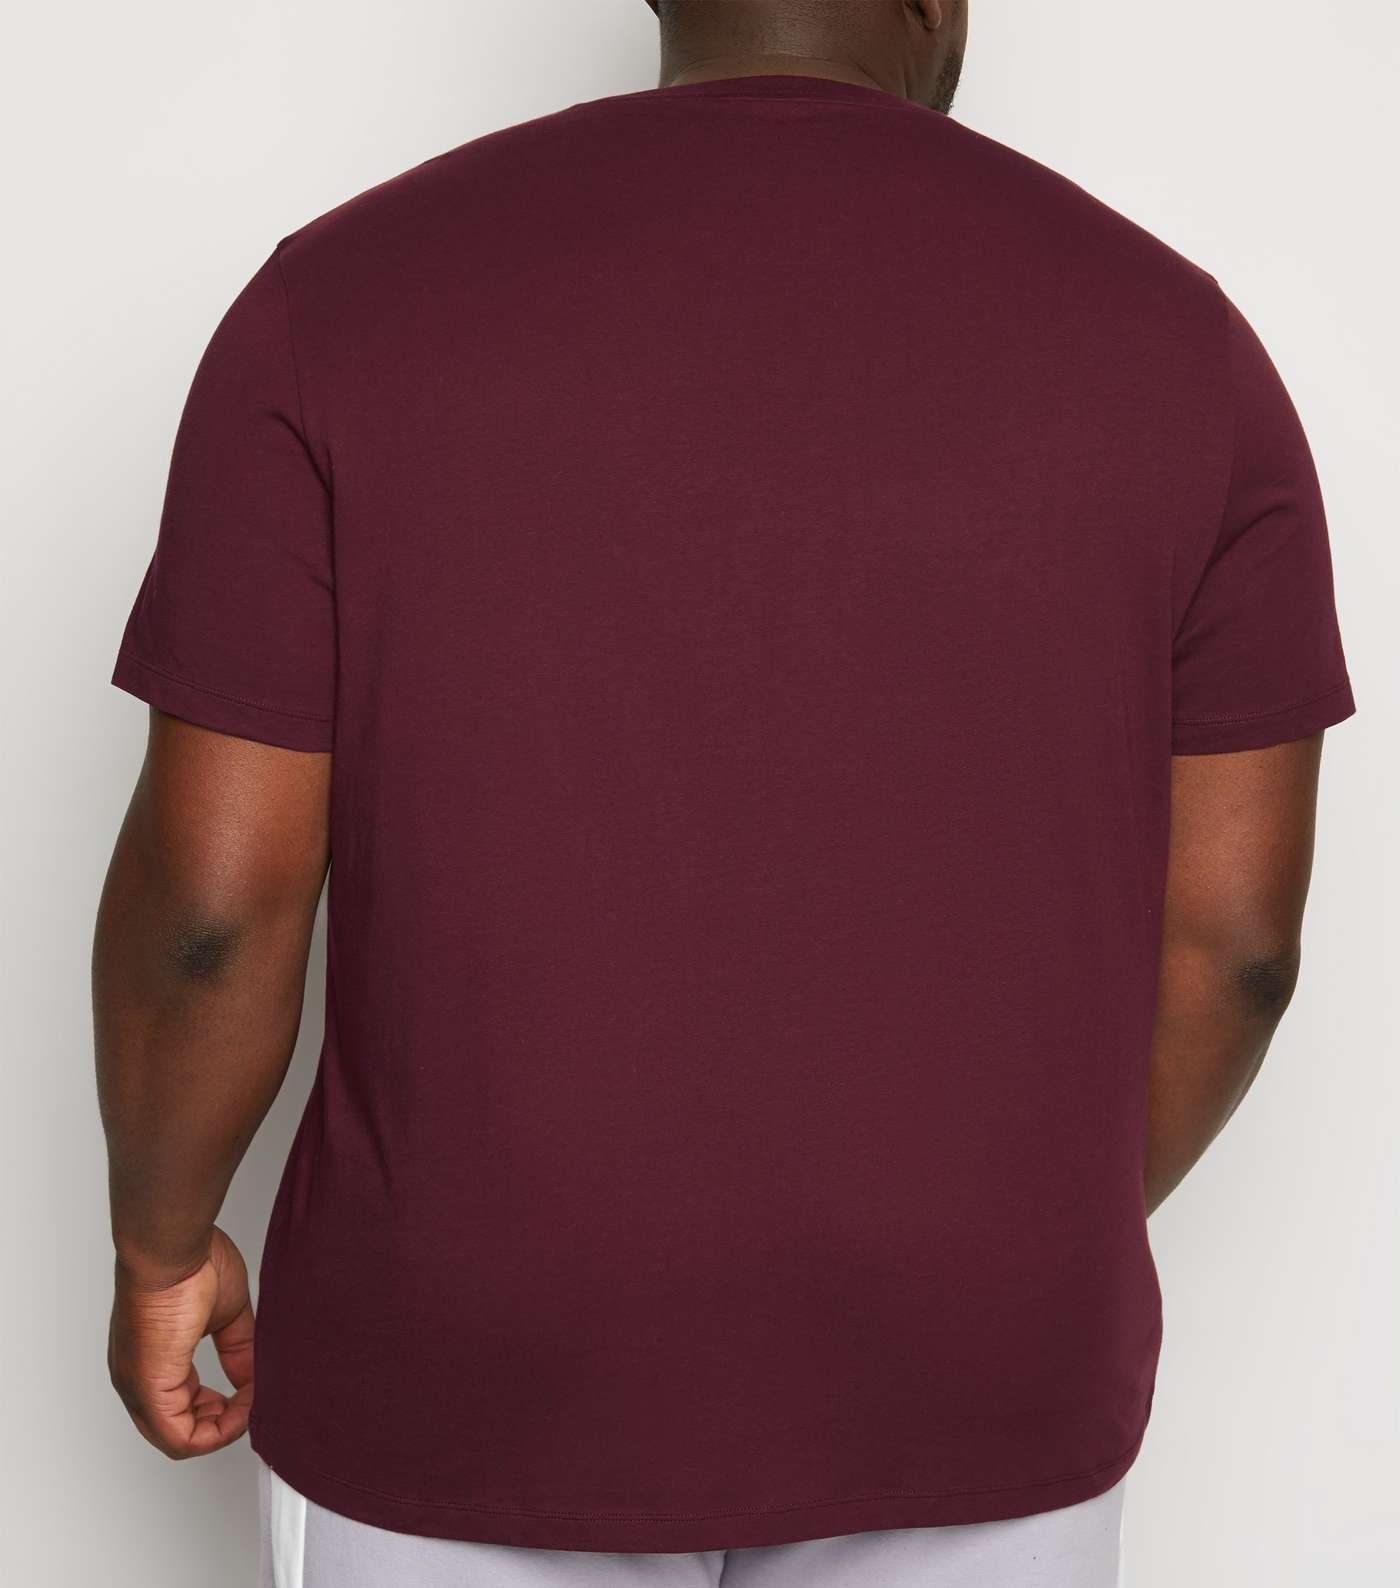 Plus Size Burgundy Crew T-Shirt Image 3